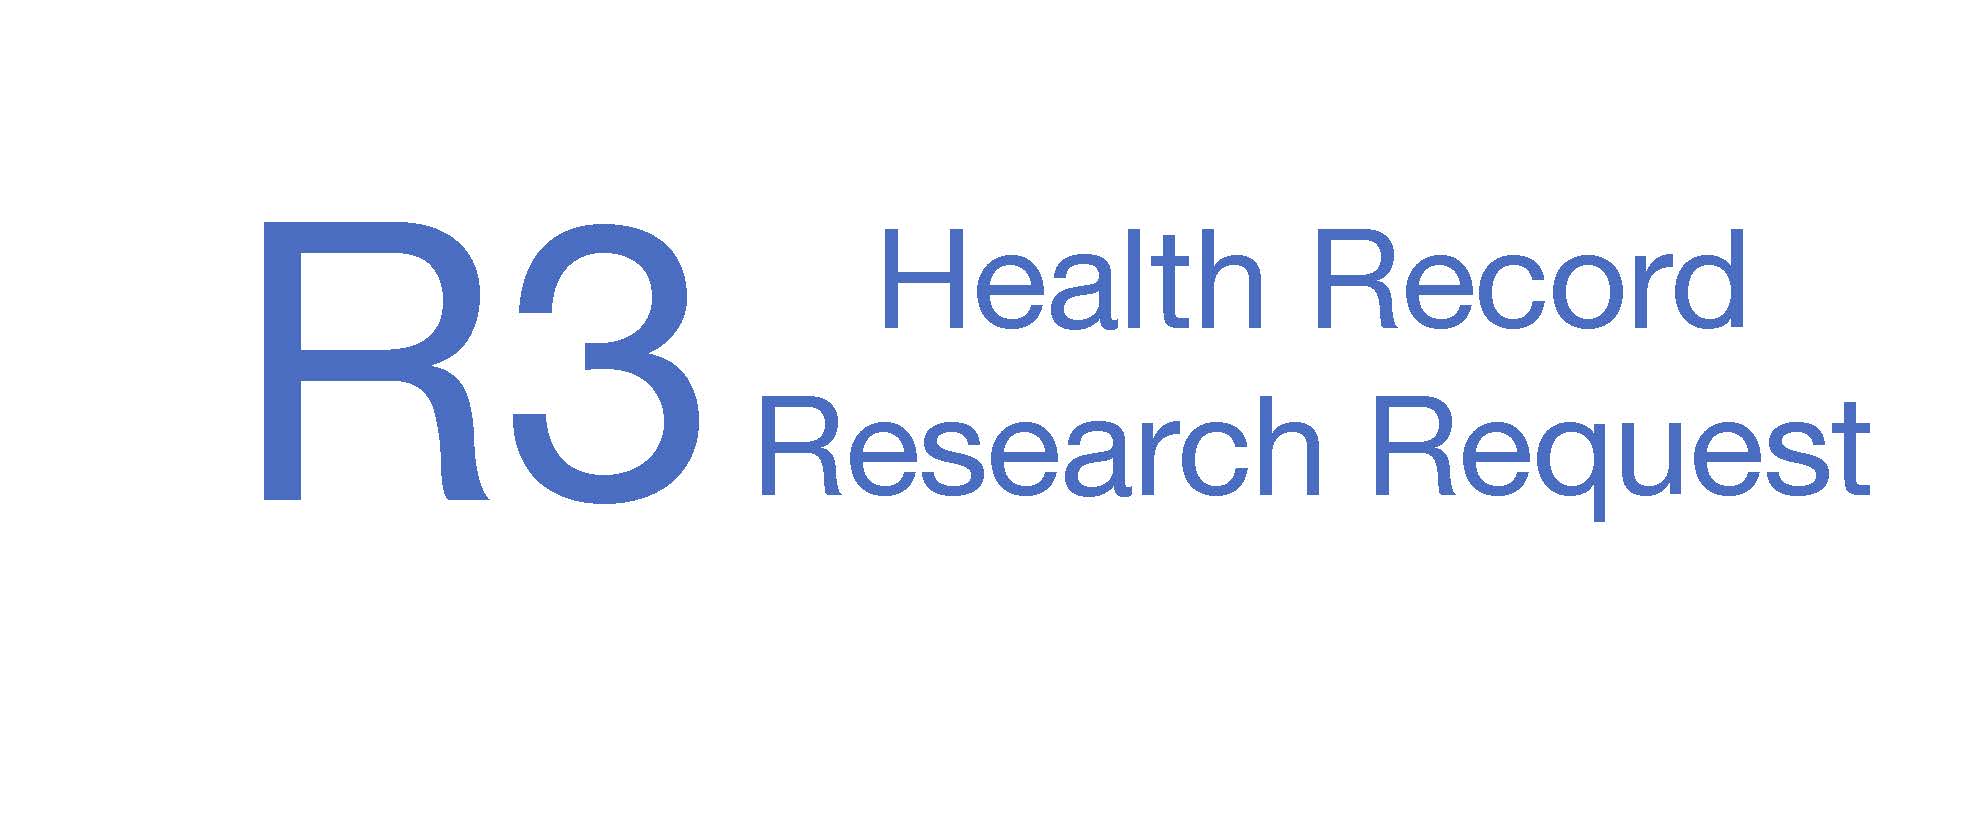 R3 Health Record Research Request